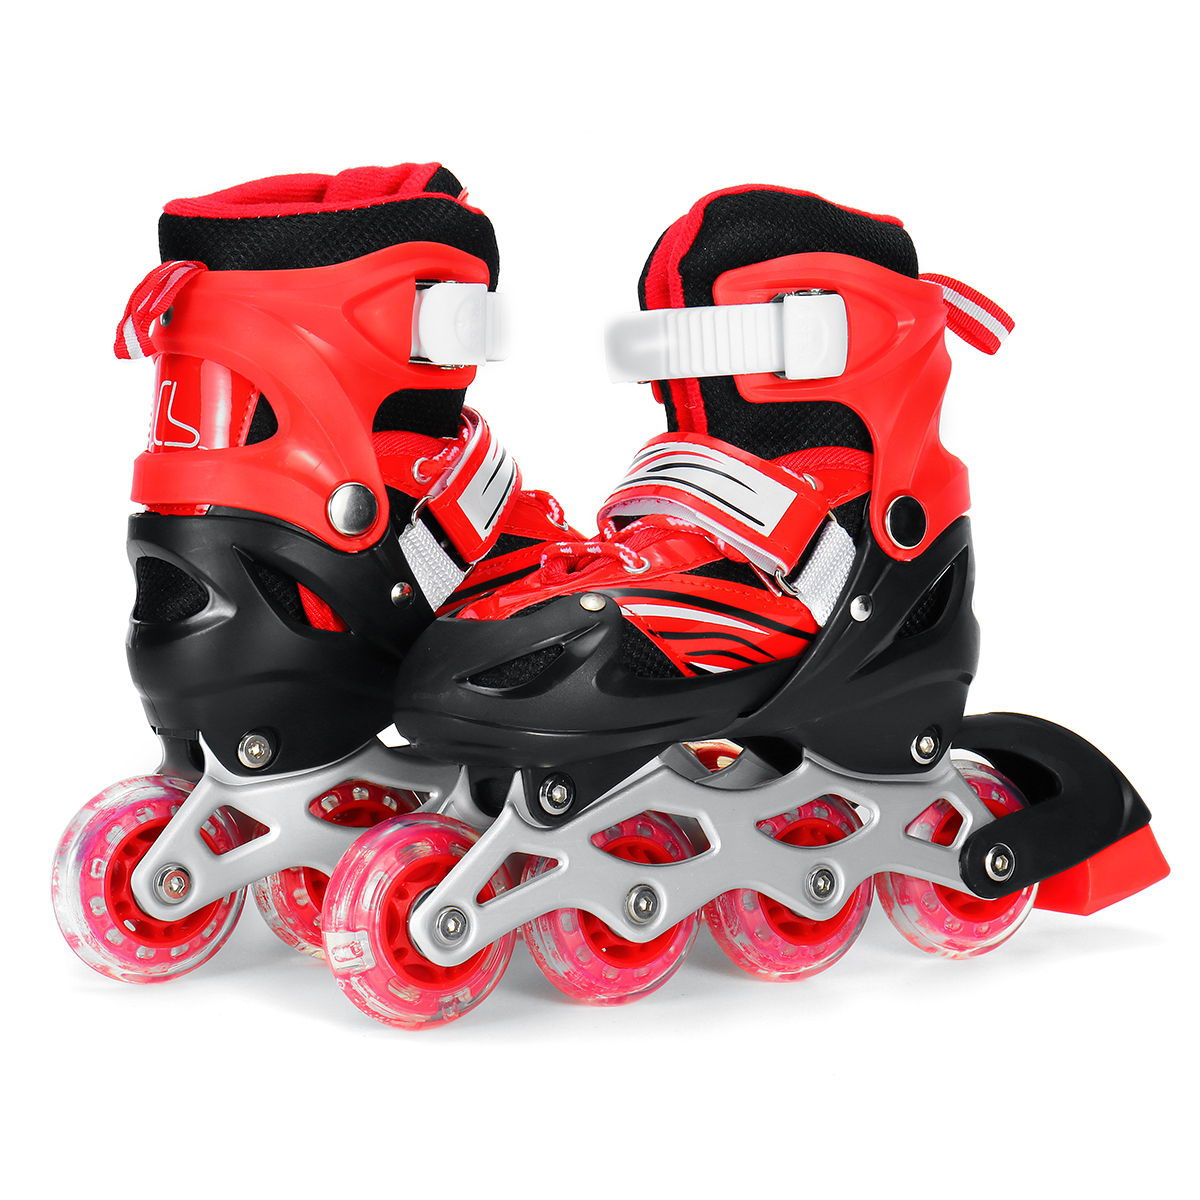 Kids-Inline-Skates-Professional-Single-Row-4-Wheels-Skating-Shoes-Children-Adult-1819599-6